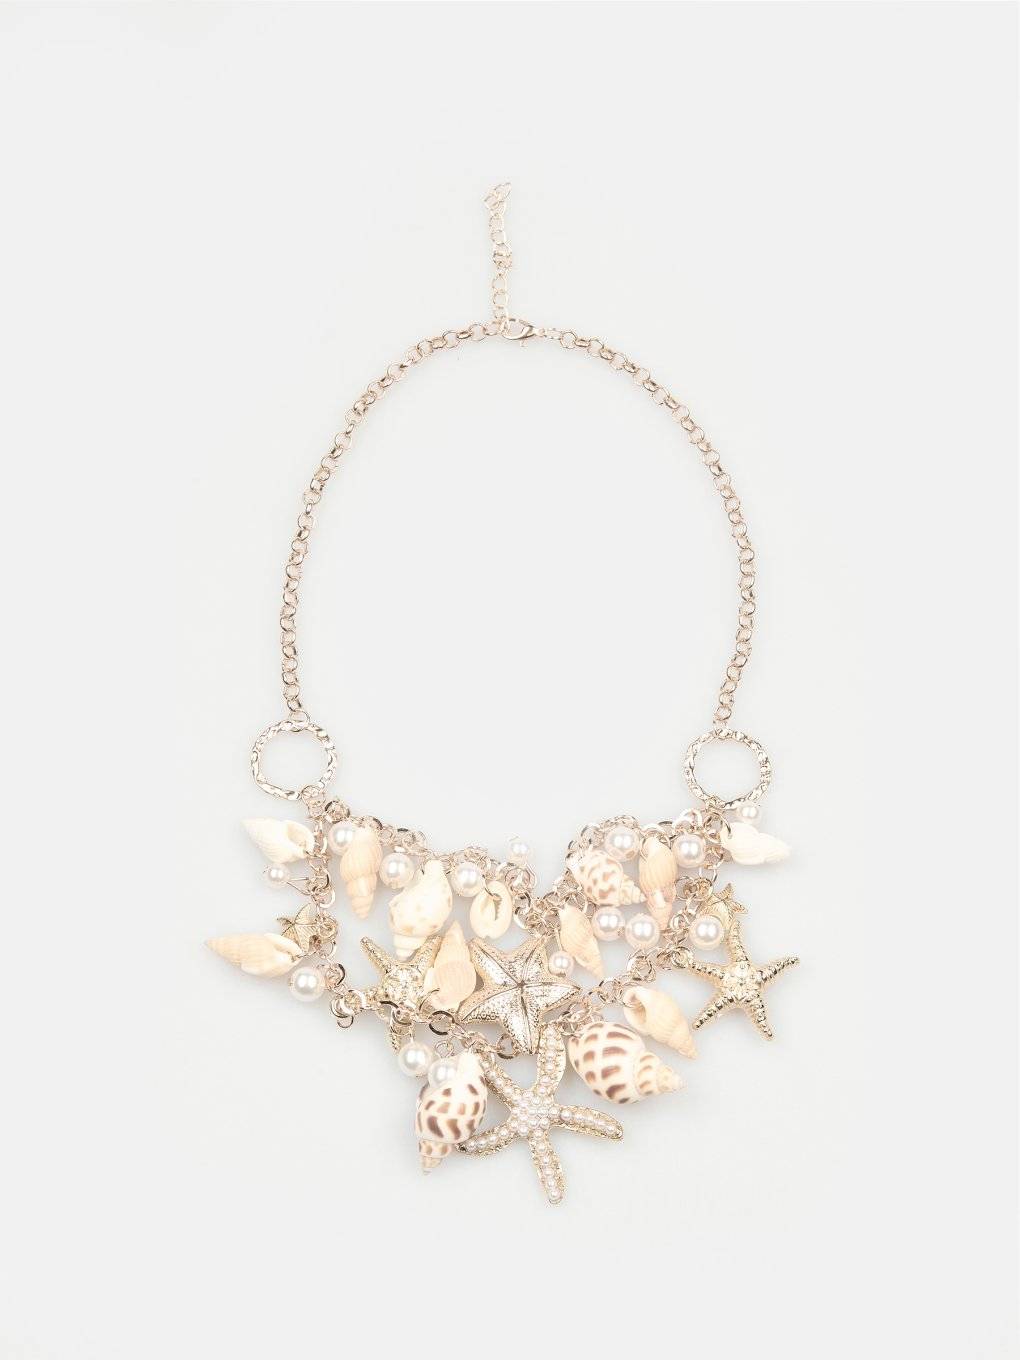 Necklace with decorative seashells